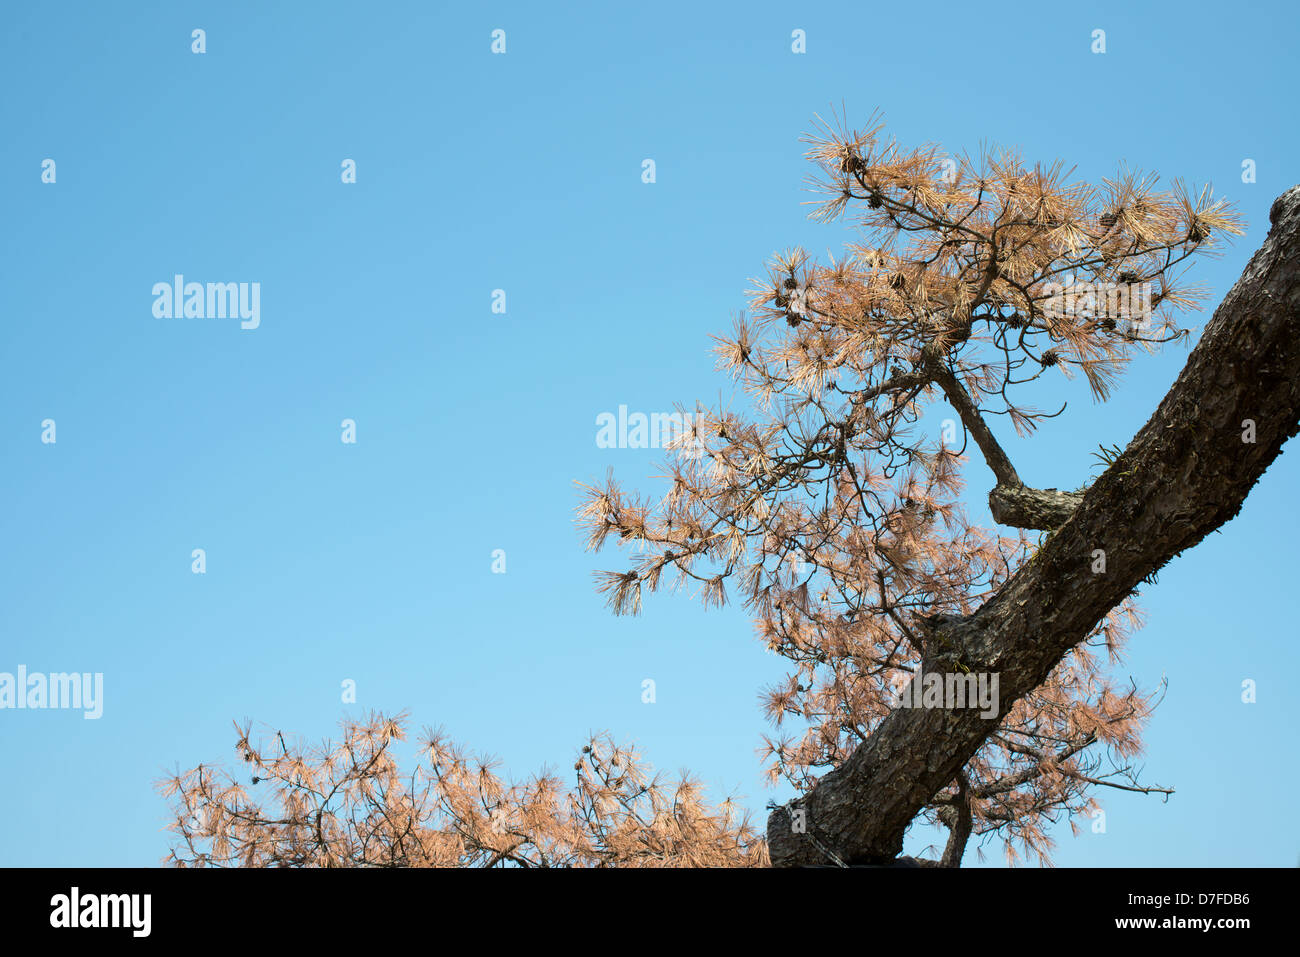 Arbre généalogique de pins morts contre un ciel bleu Banque D'Images